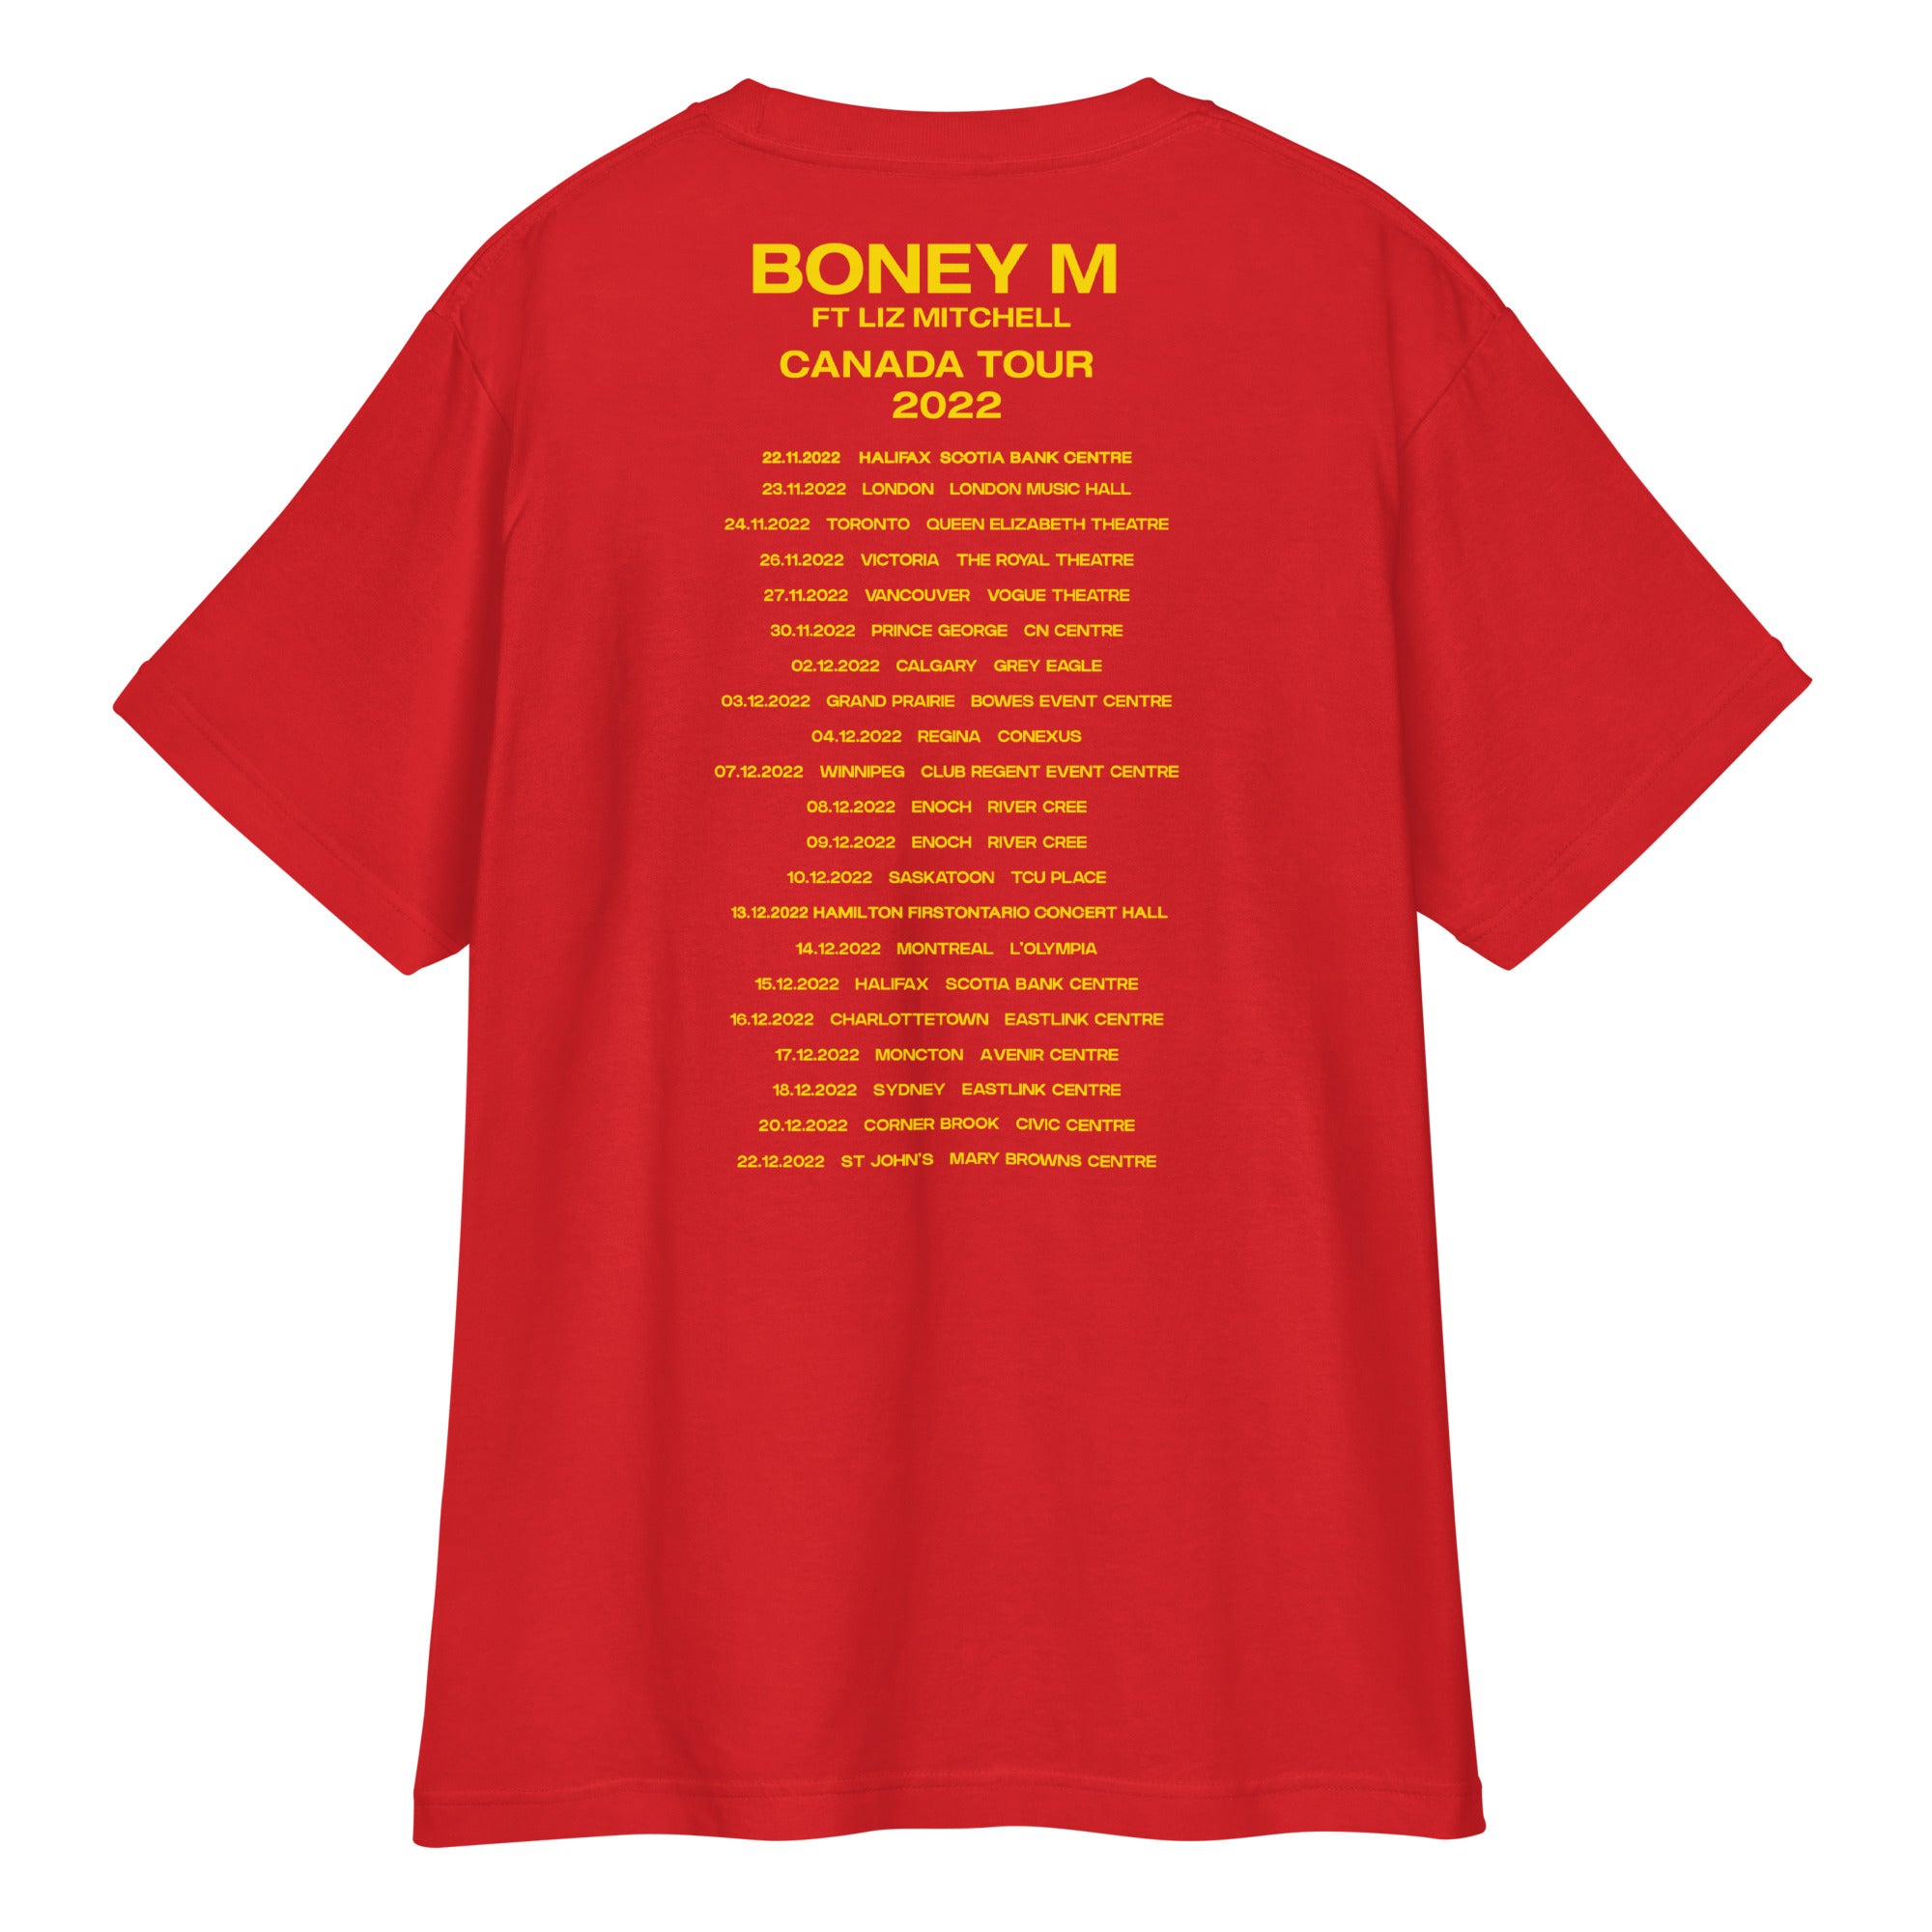 Boney M ft Liz Mitchell - Canada Tour T-Shirt